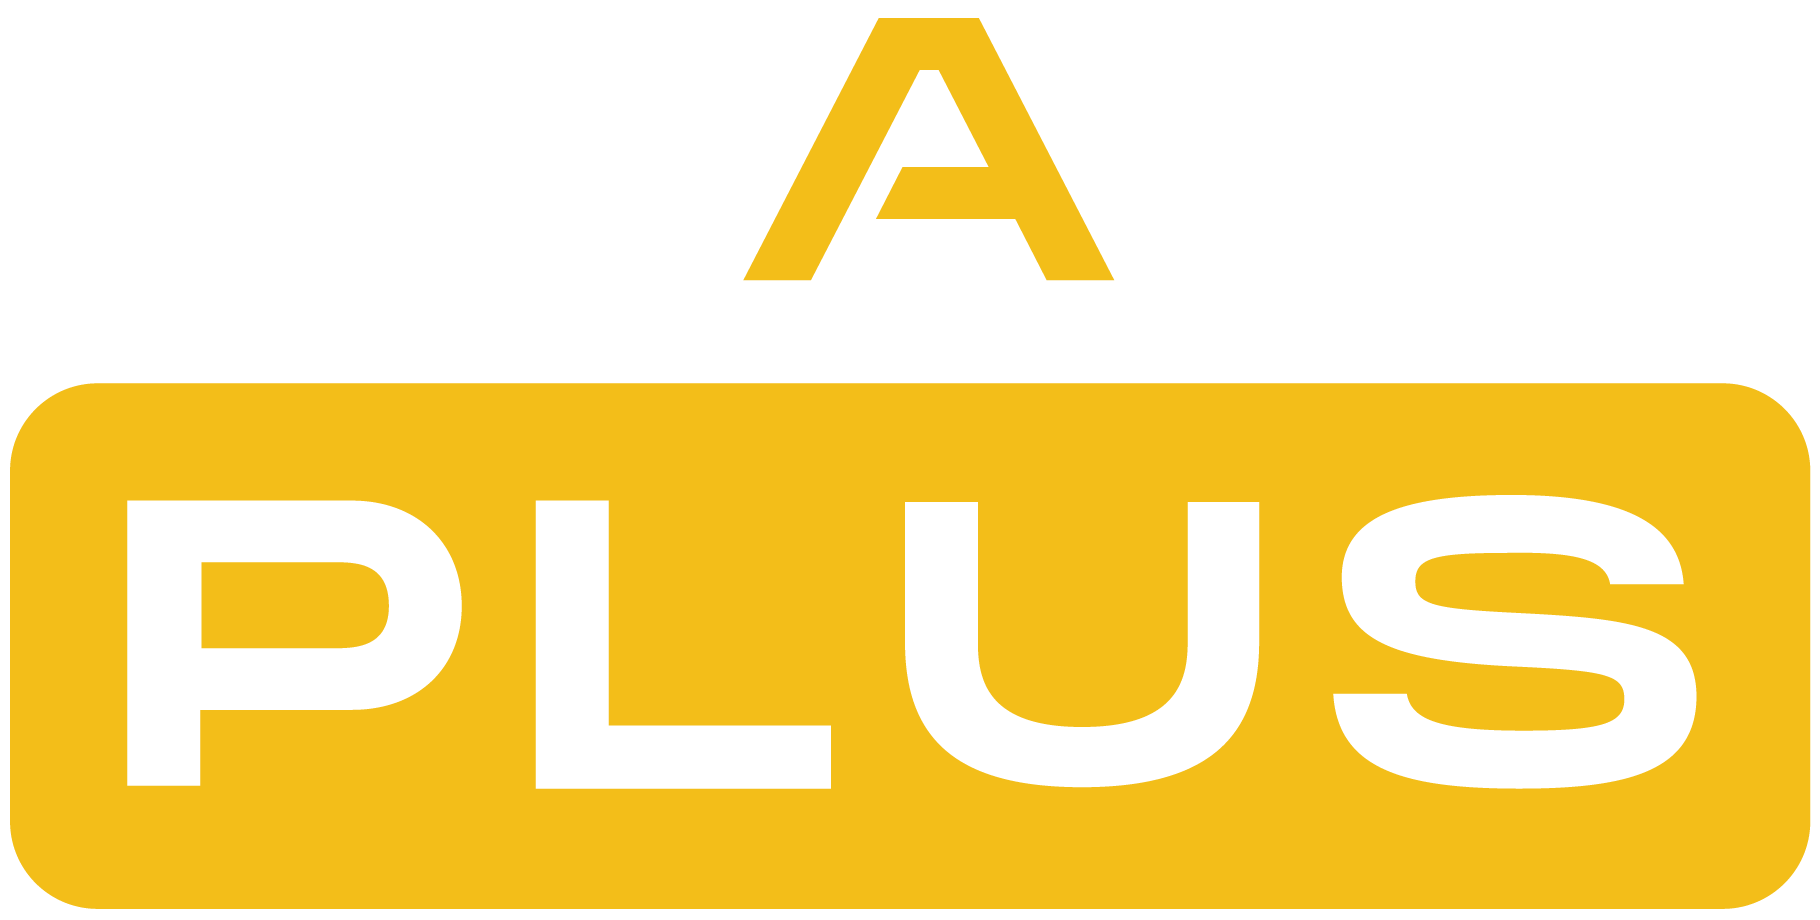 Space Plus Logo